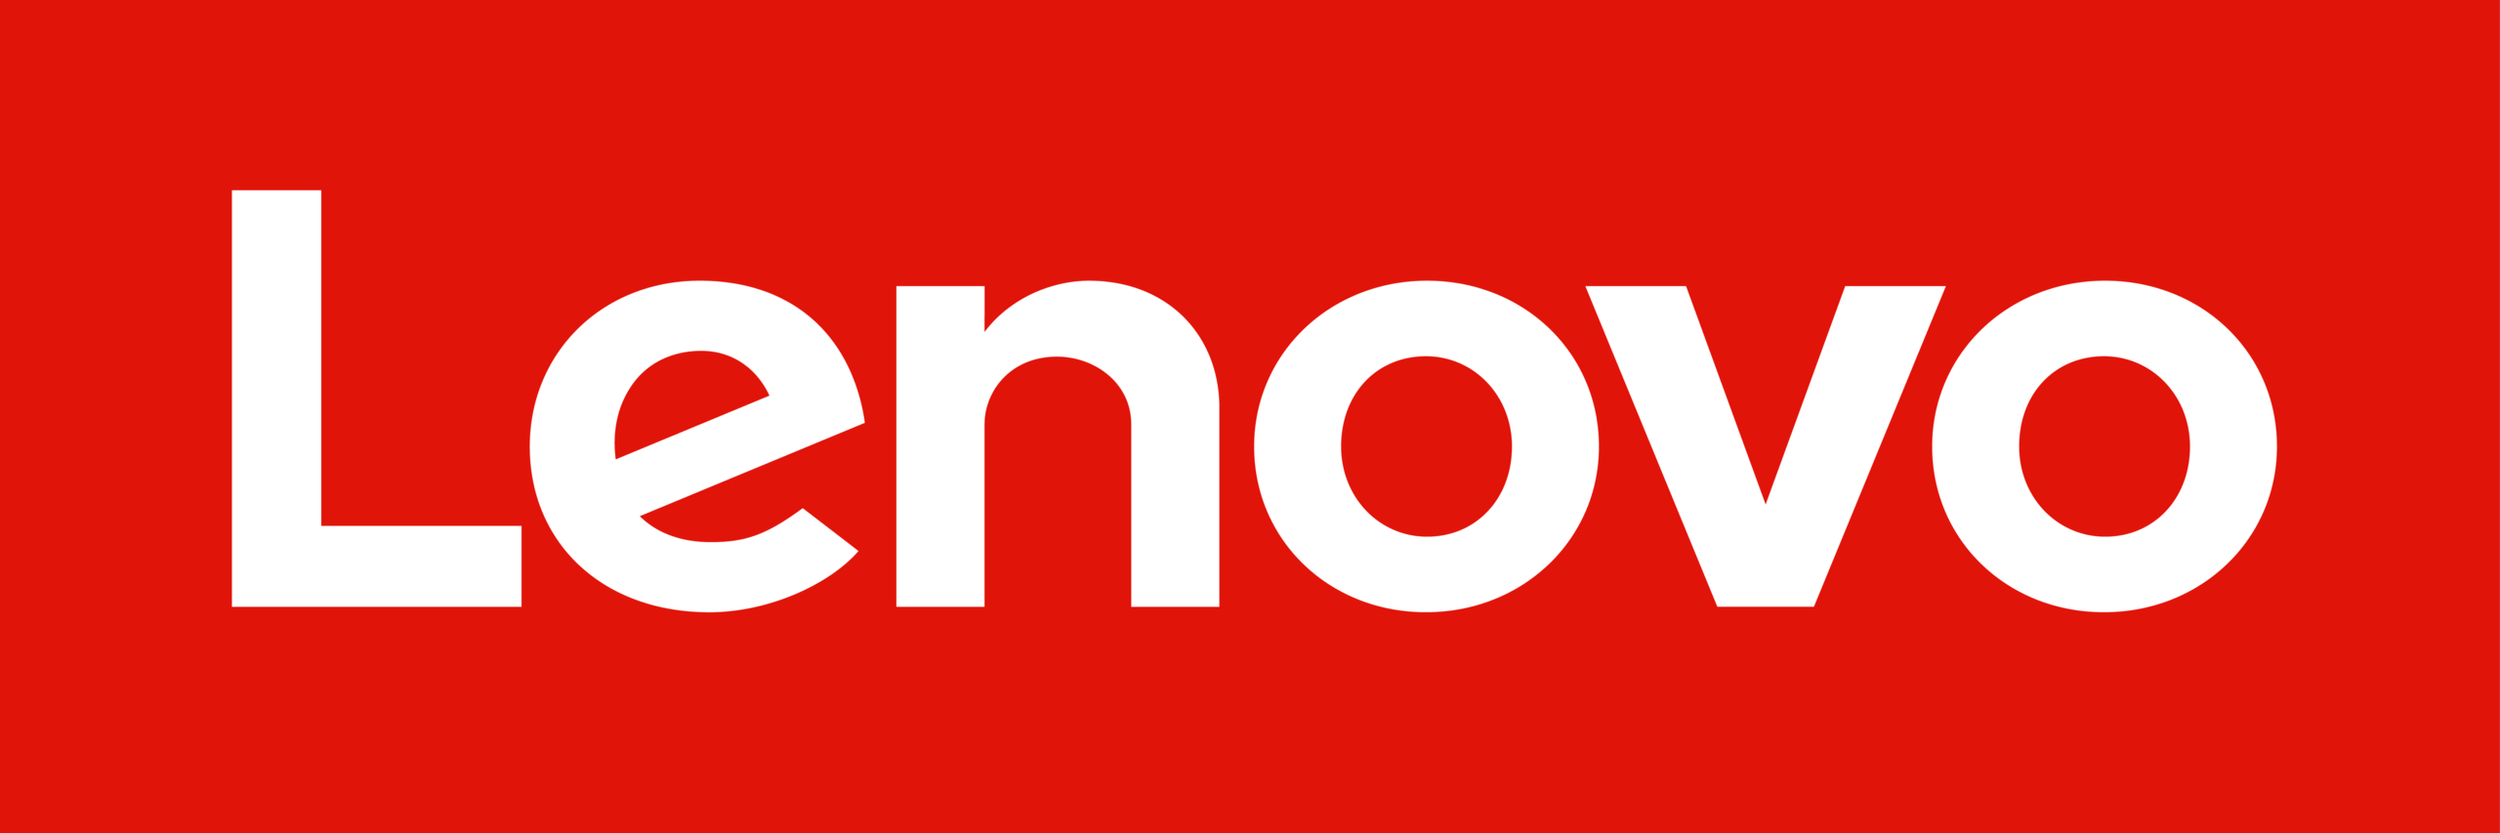 2560px-Lenovo_Global_Corporate_Logo.png